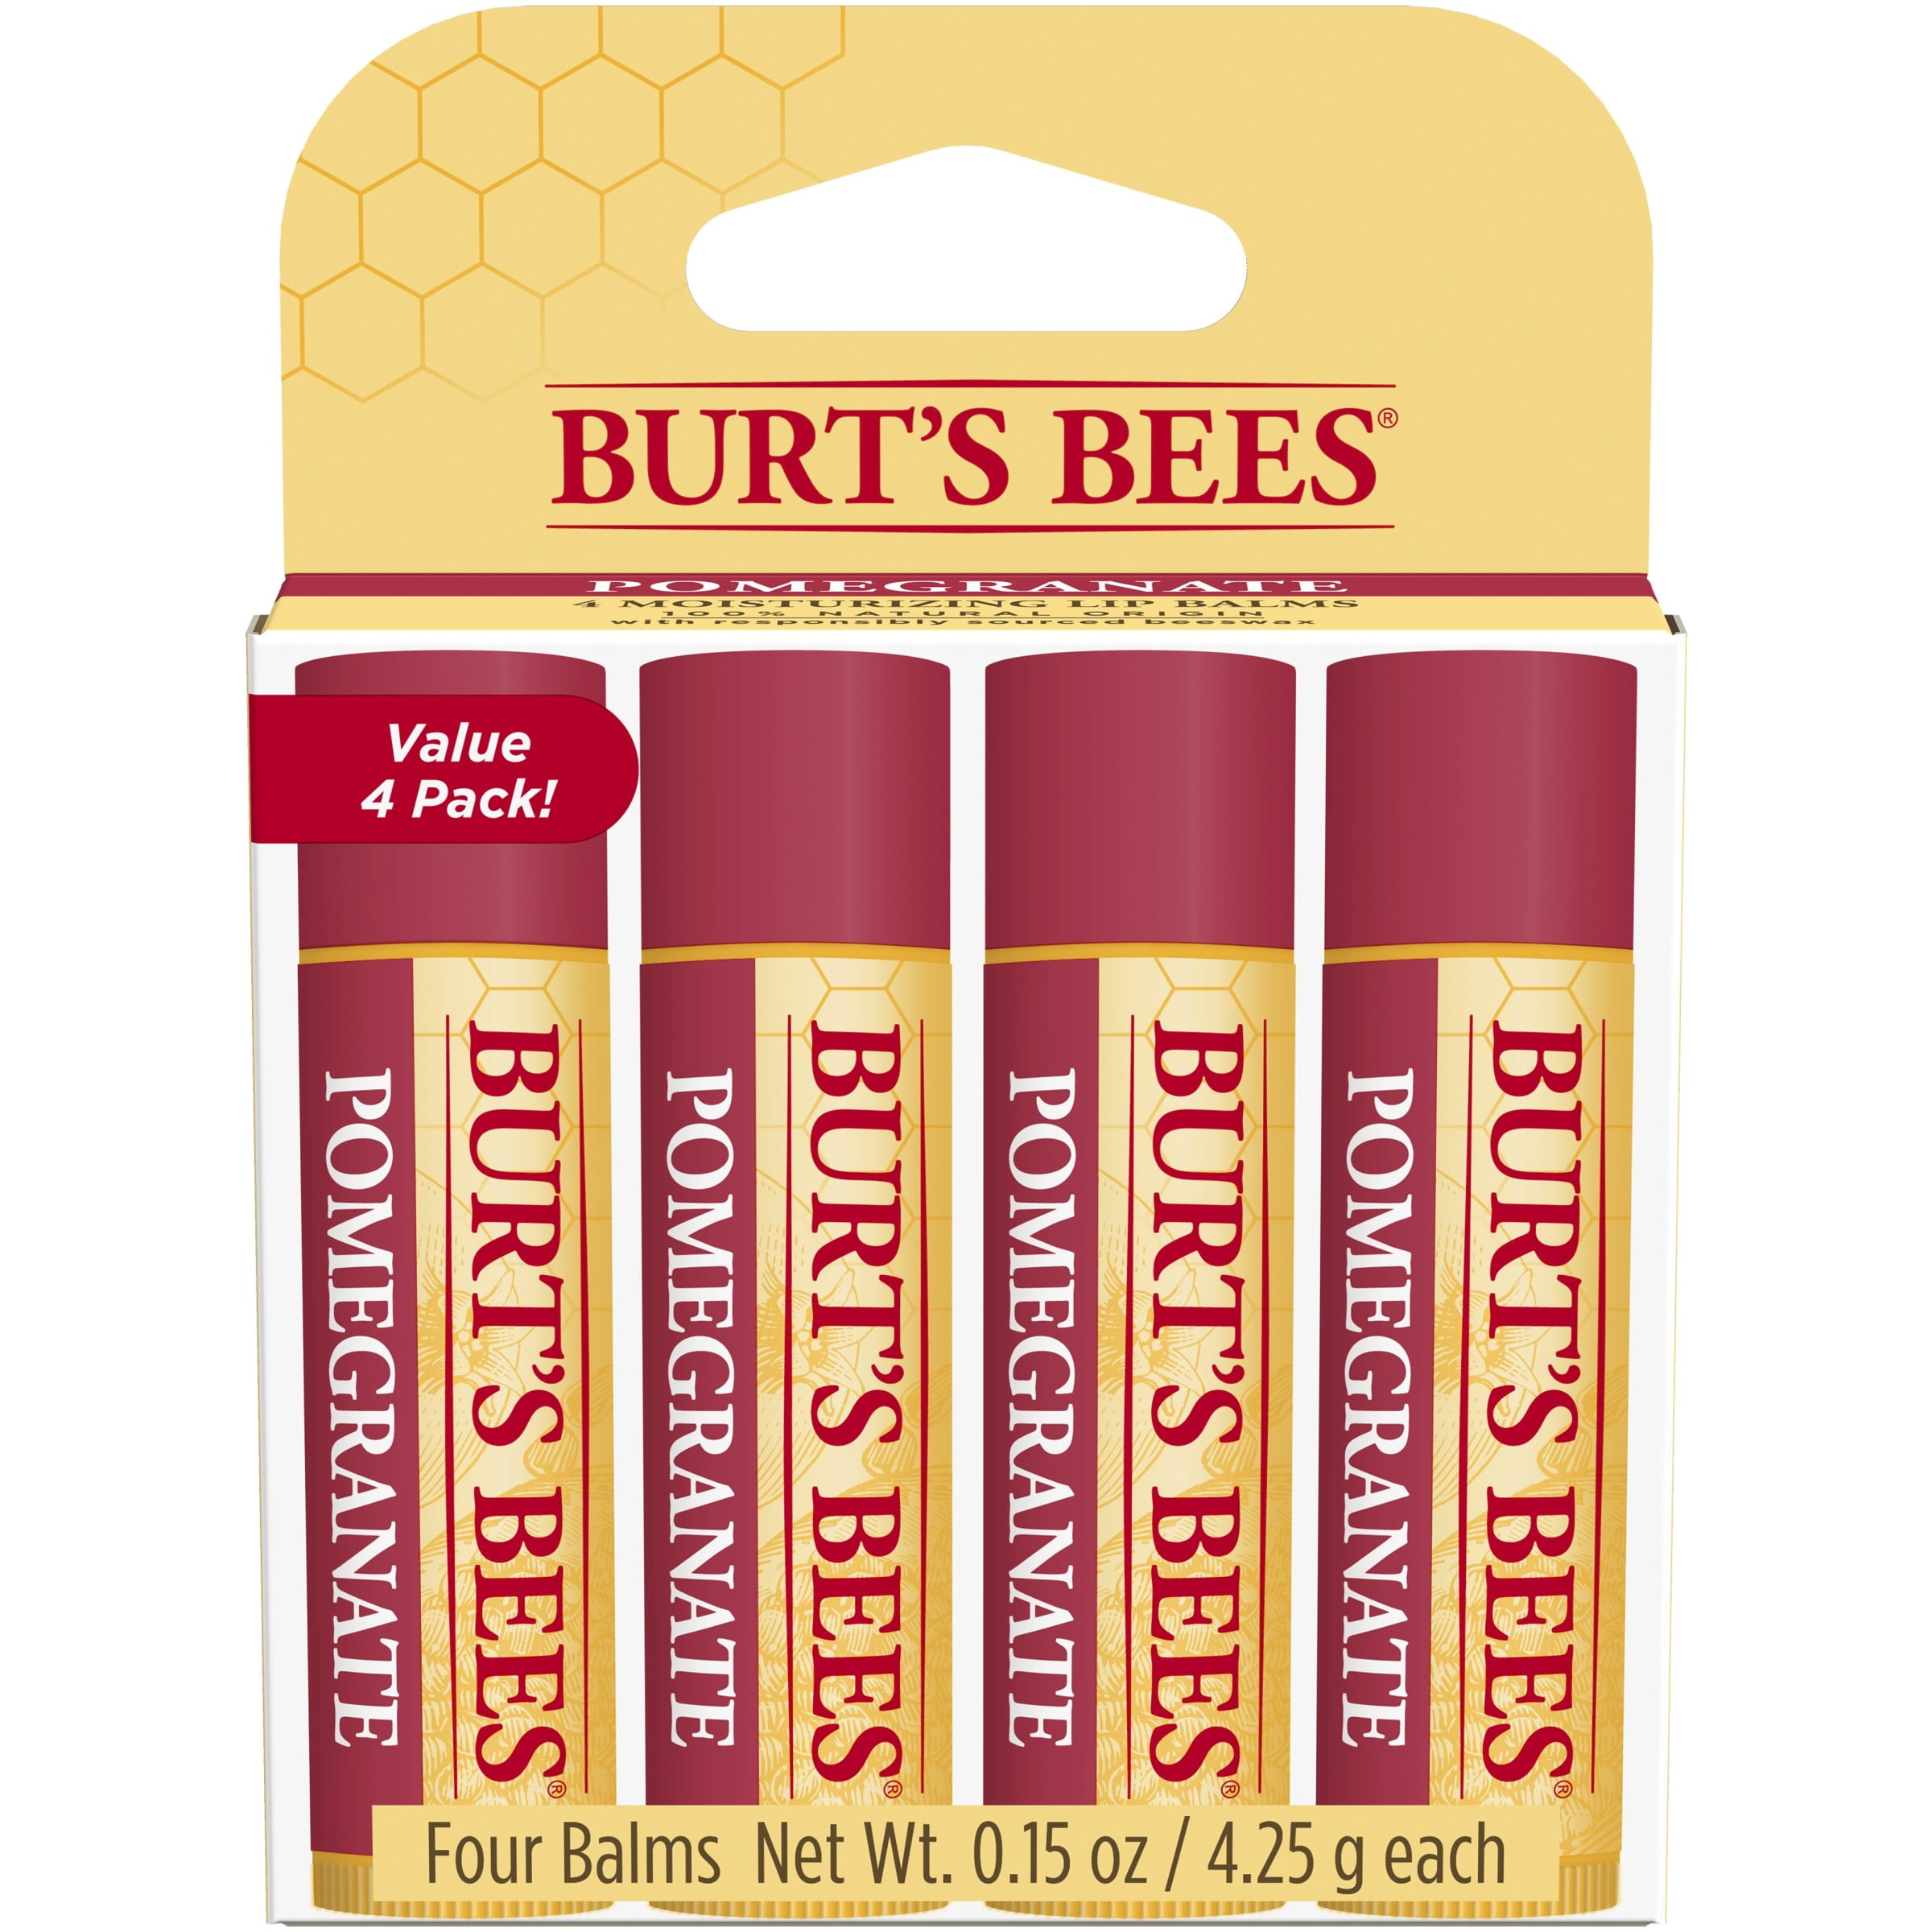 Burt's Bees 100% Natural Origin Beeswax Moisturizing Lip Balm (8 pk.) -  Sam's Club